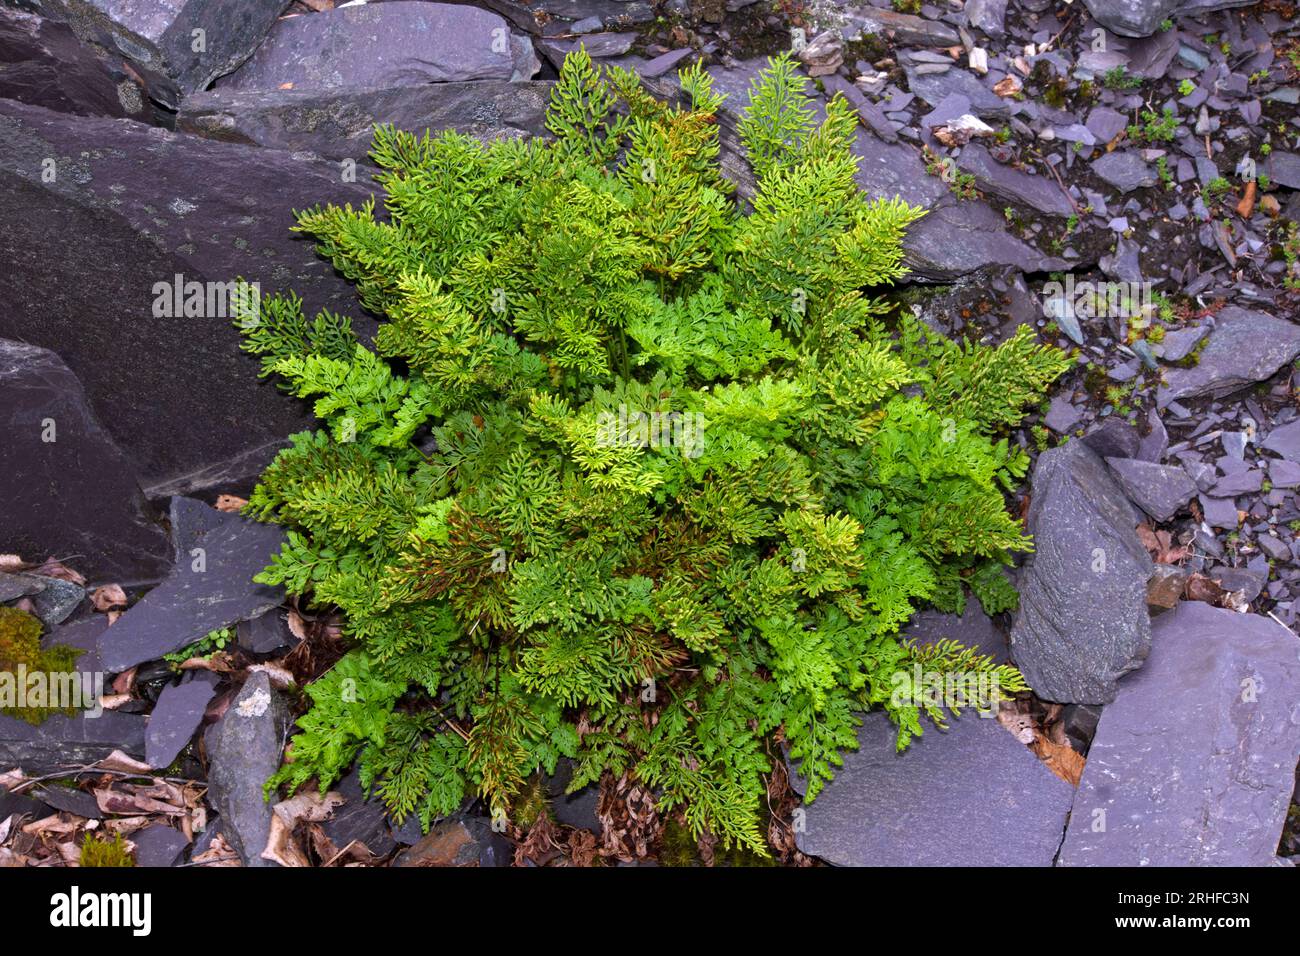 Cryptogramma crispa (parsley fern) is an Arctic–alpine fern found among acidic rocks.This fern was in a slate quarry in Snowdonia. Stock Photo